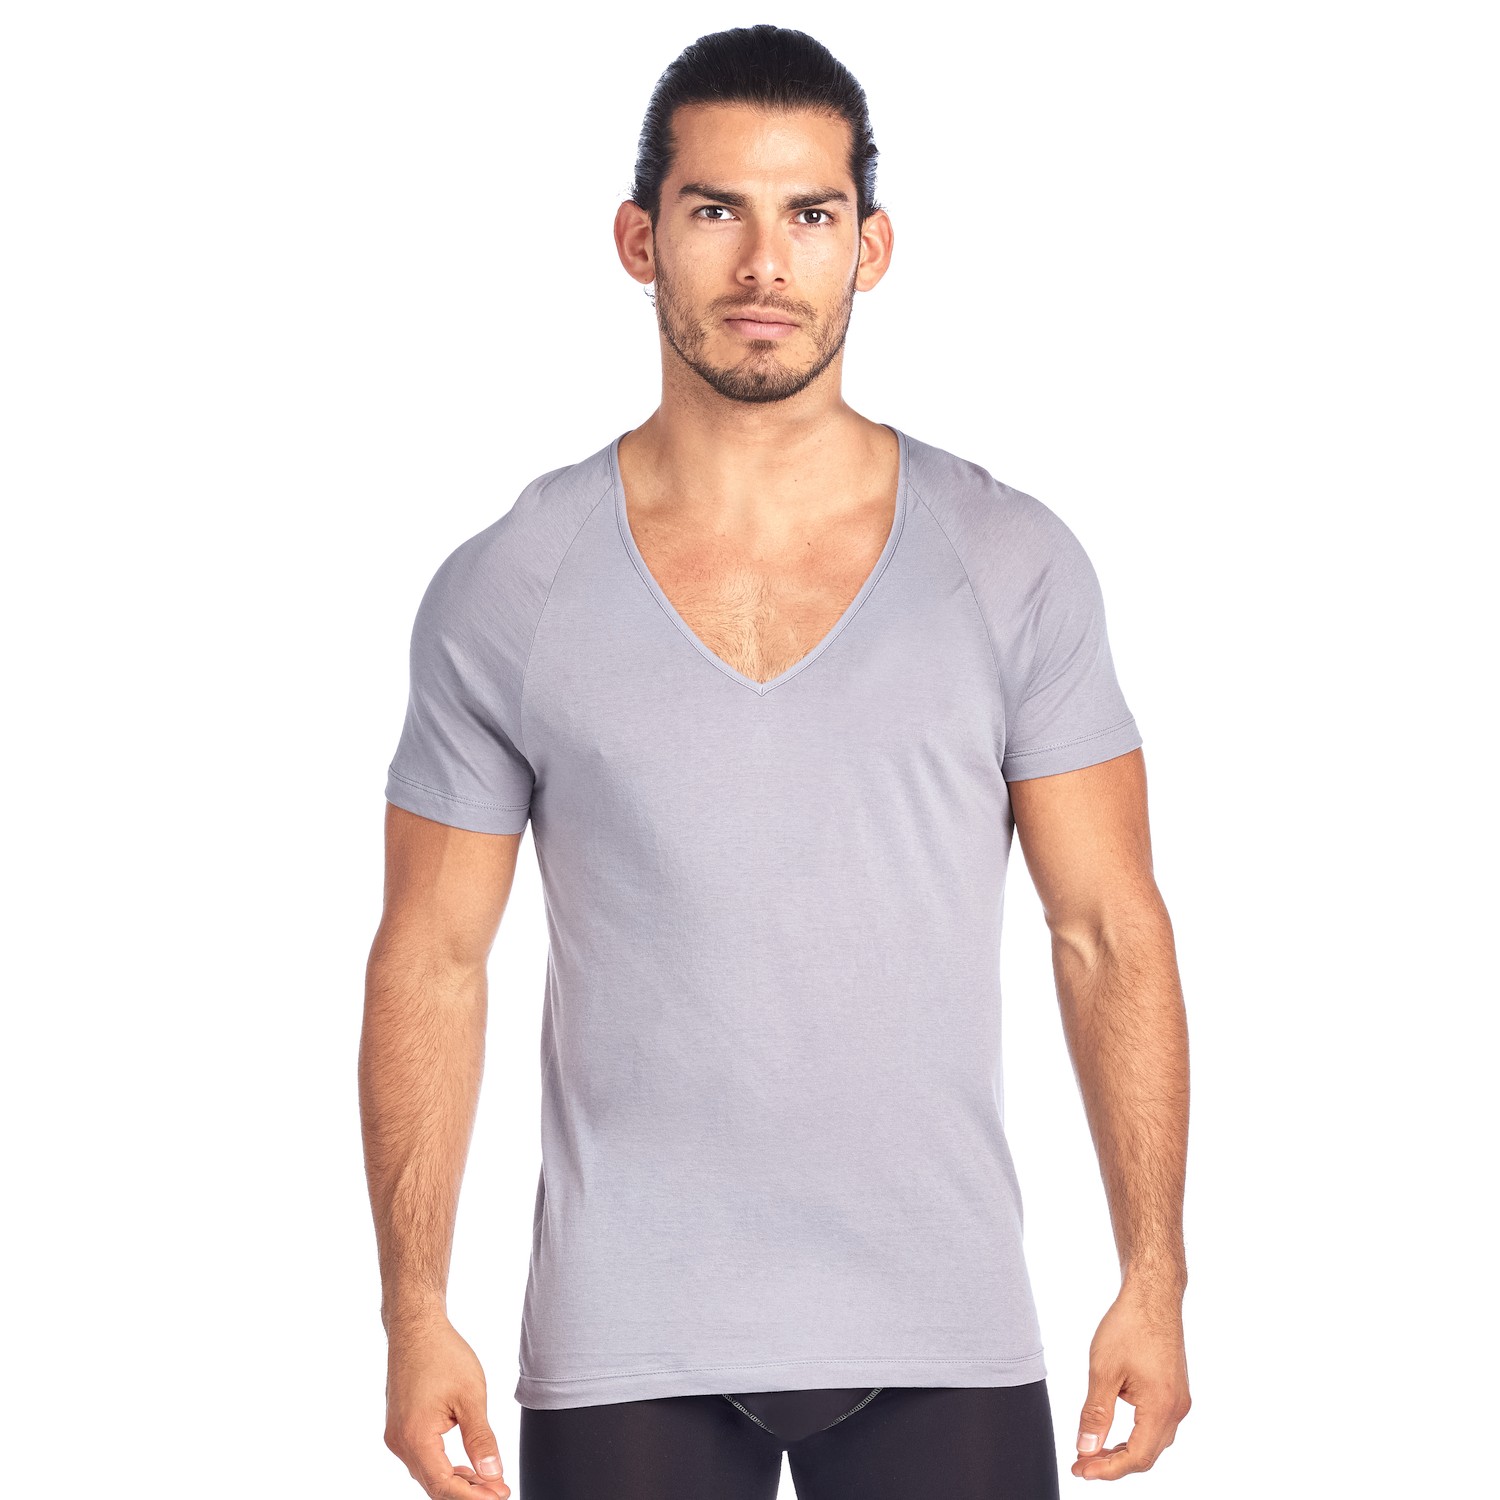 https://undershirtless.com/wp-content/uploads/2016/04/shirtless-grey-deep-v-neck-undershirt-2.jpg